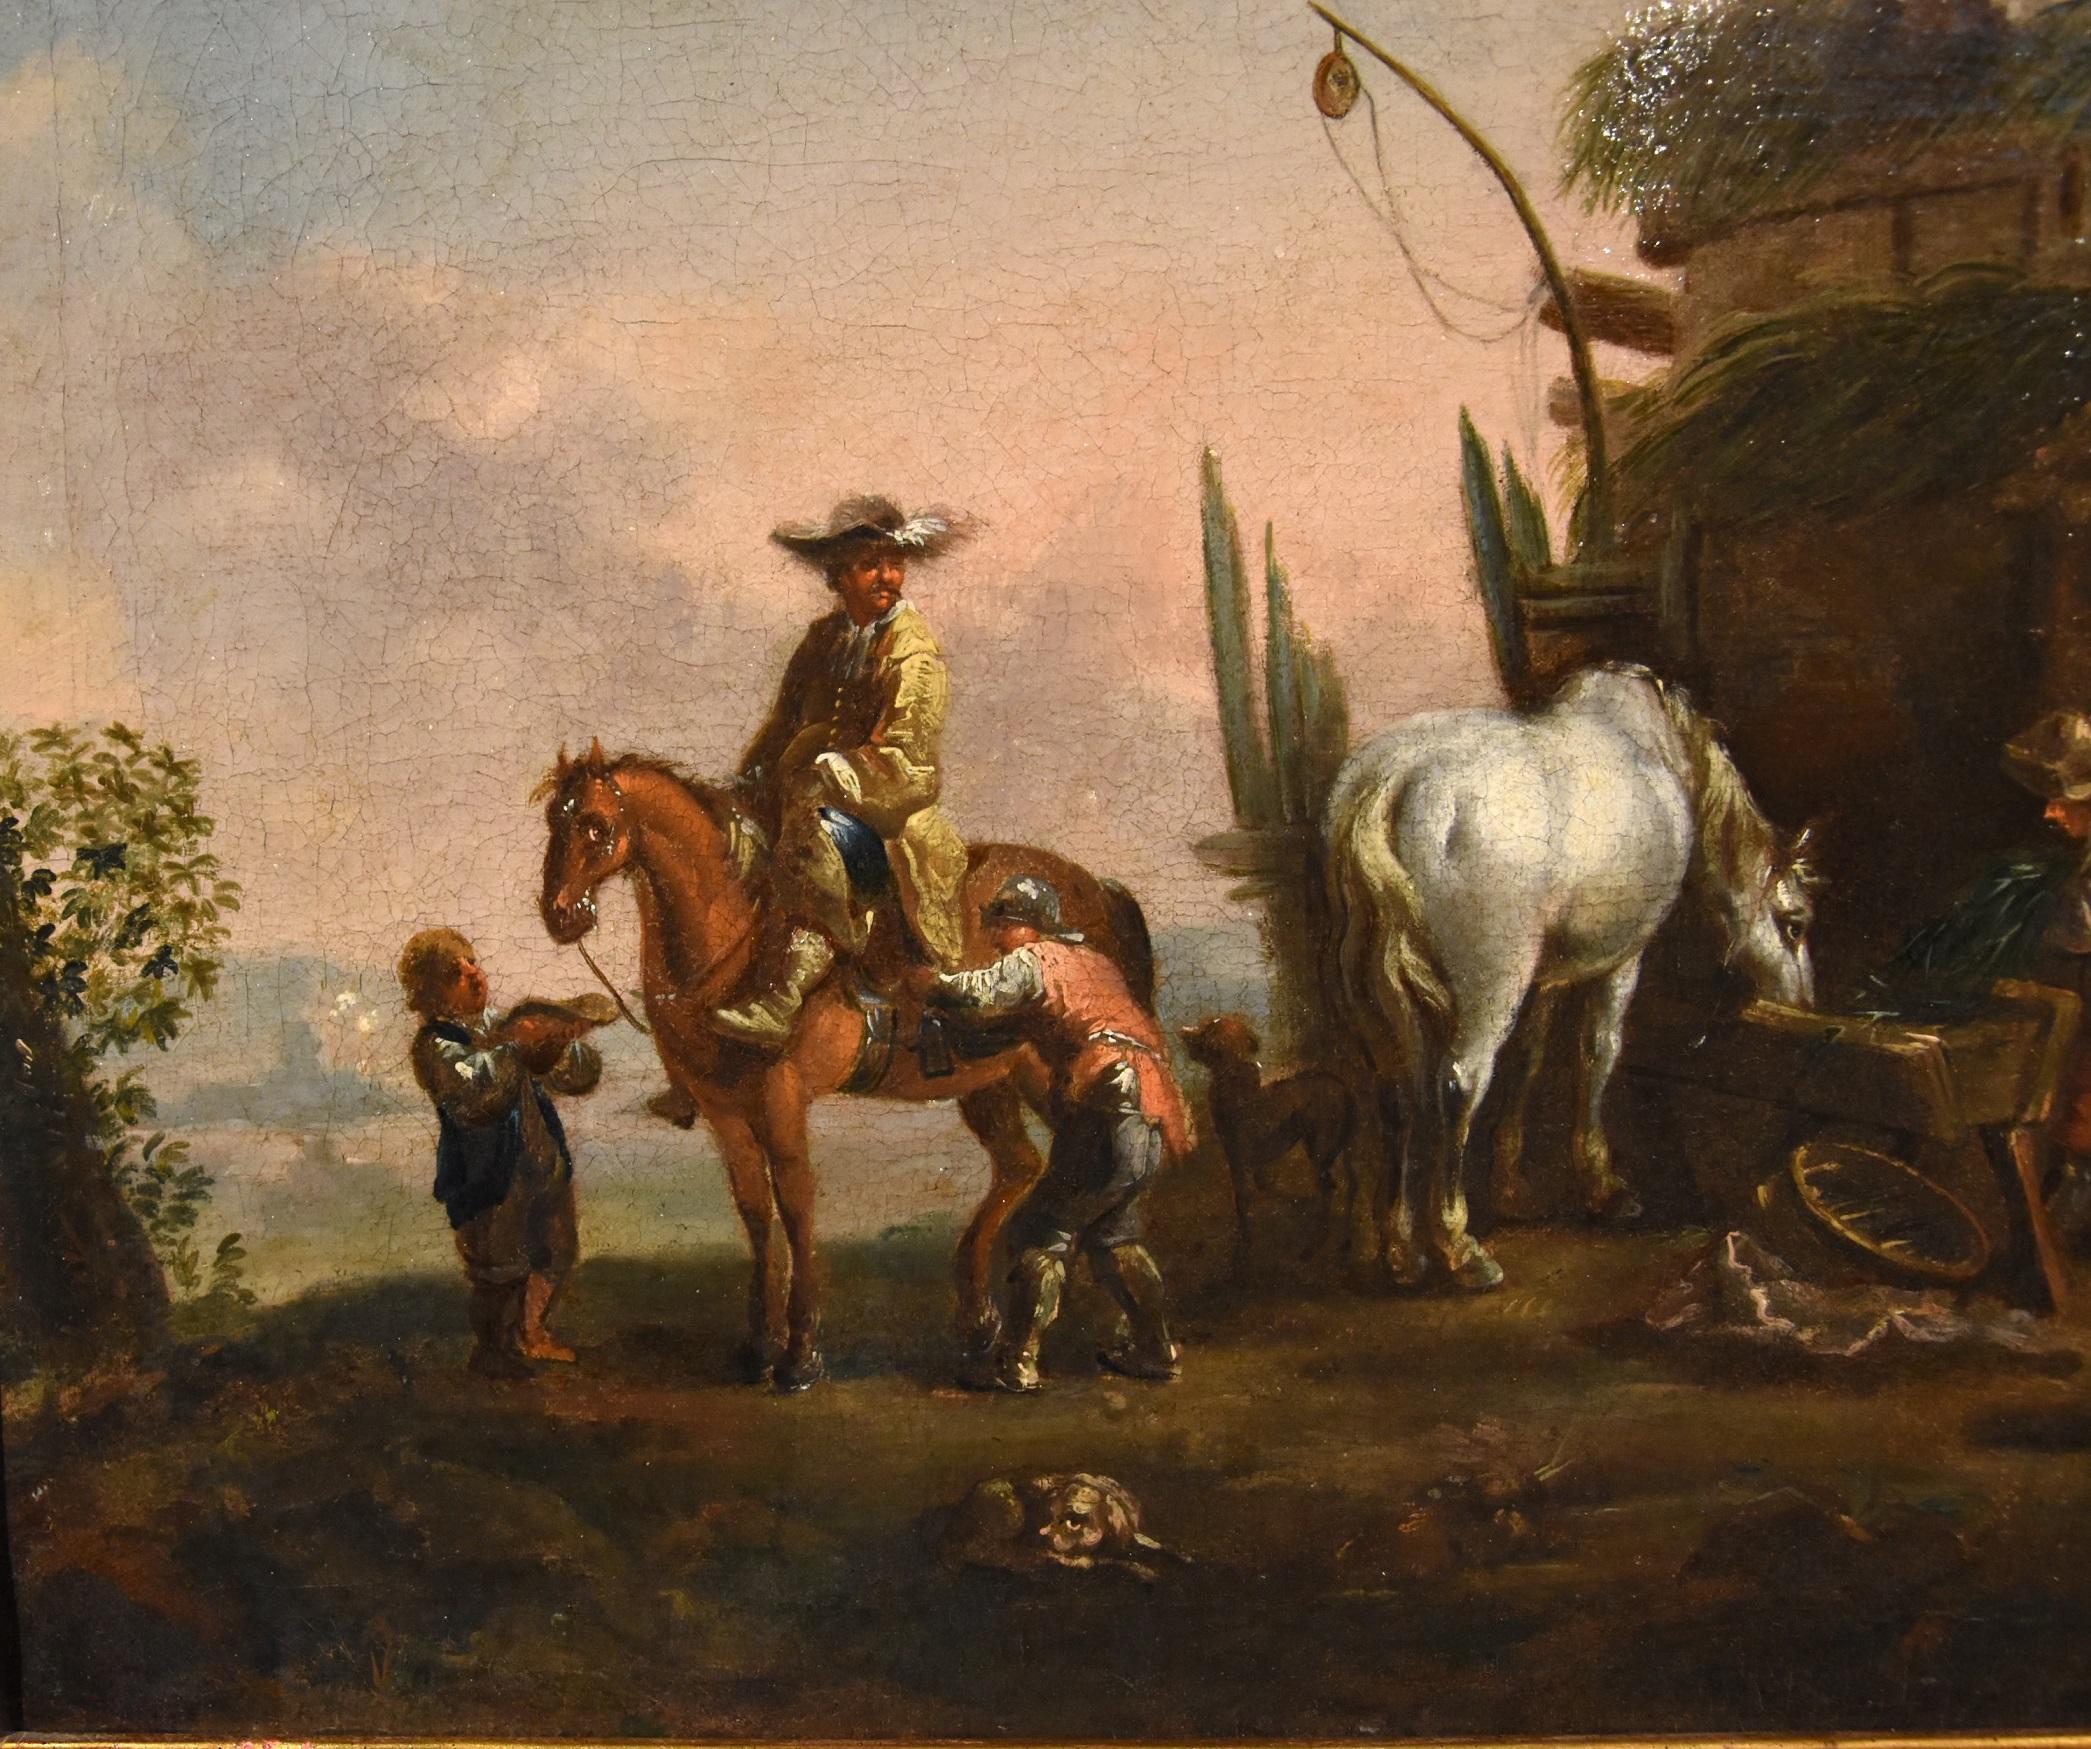 Knight Van Douw Paint Oil on canvas Old master 17/18th Century Flemish Art Italy For Sale 3